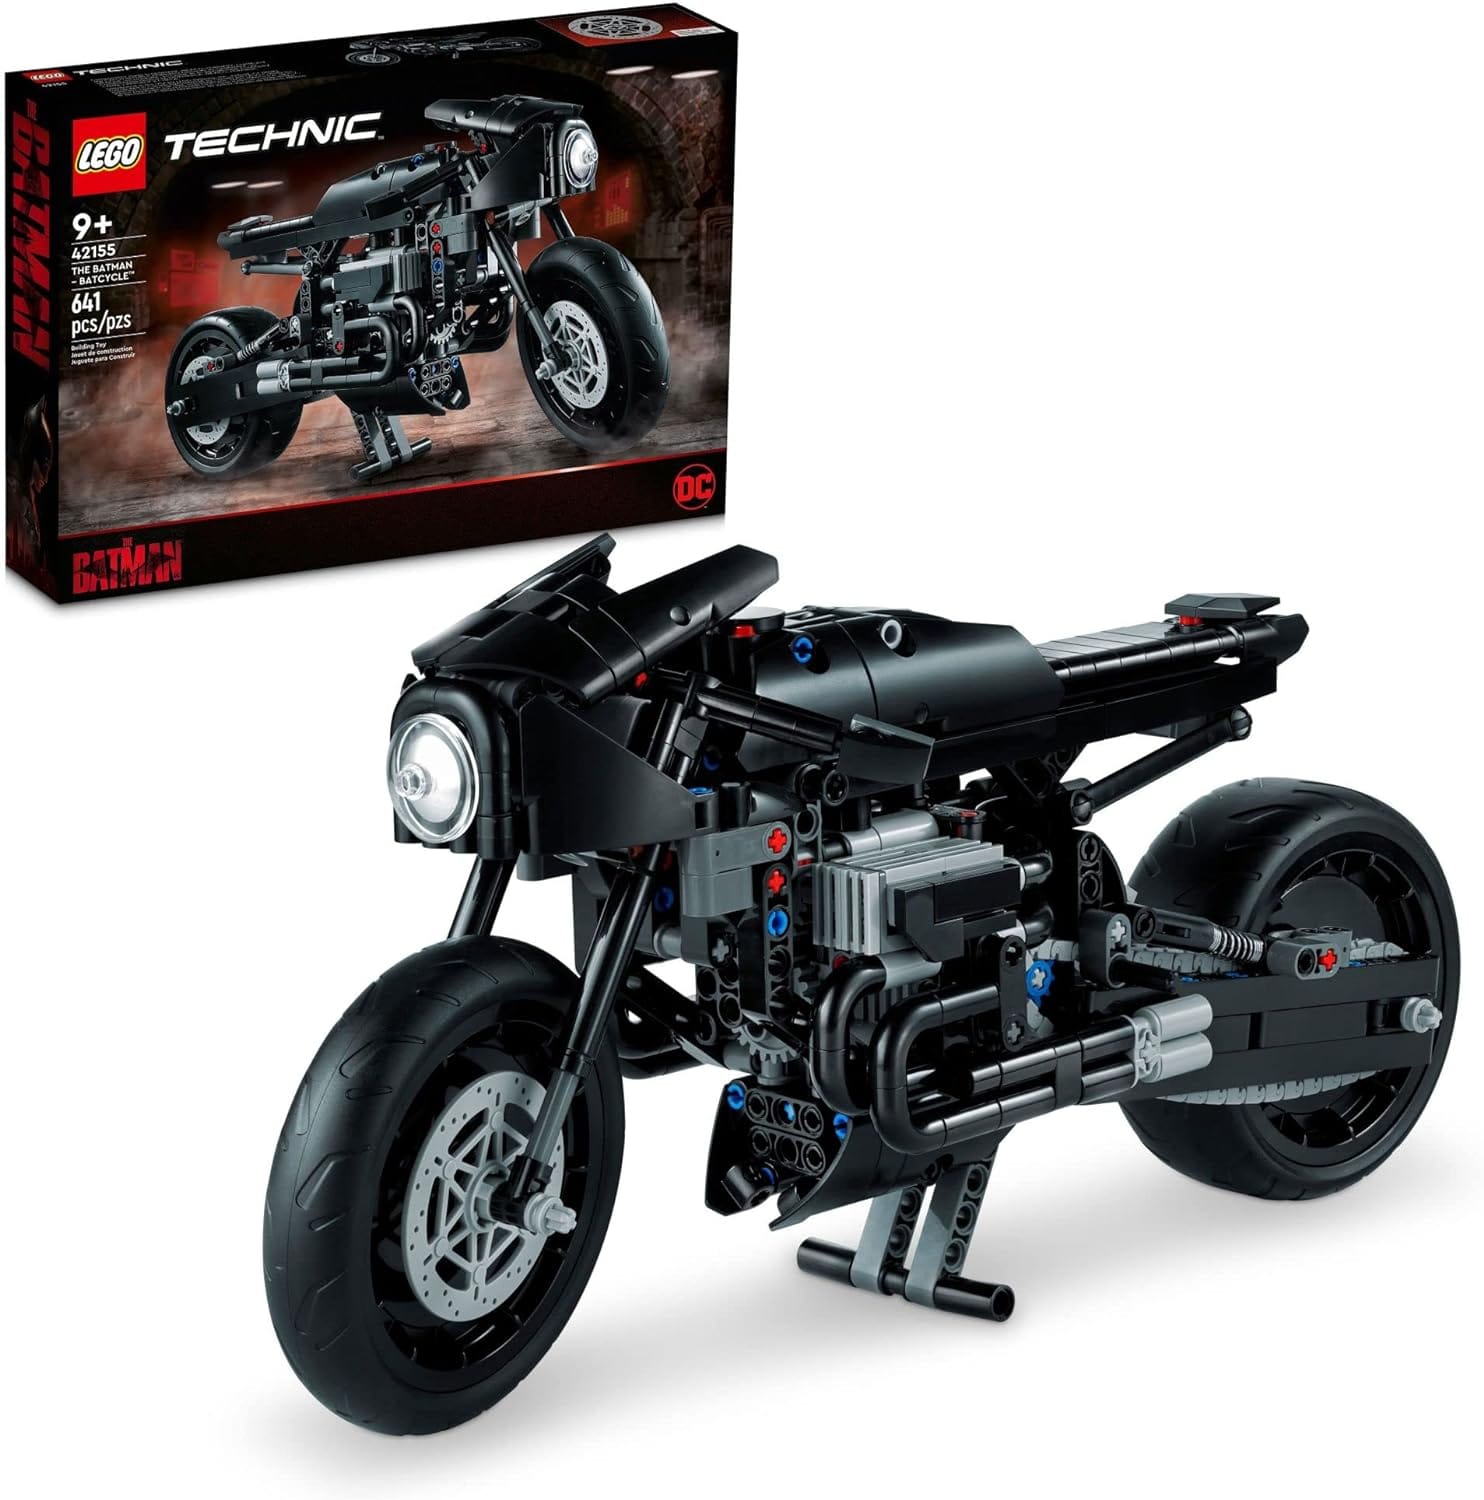 LEGO Technic The Batman - BATCYCLE Set 42155 Review